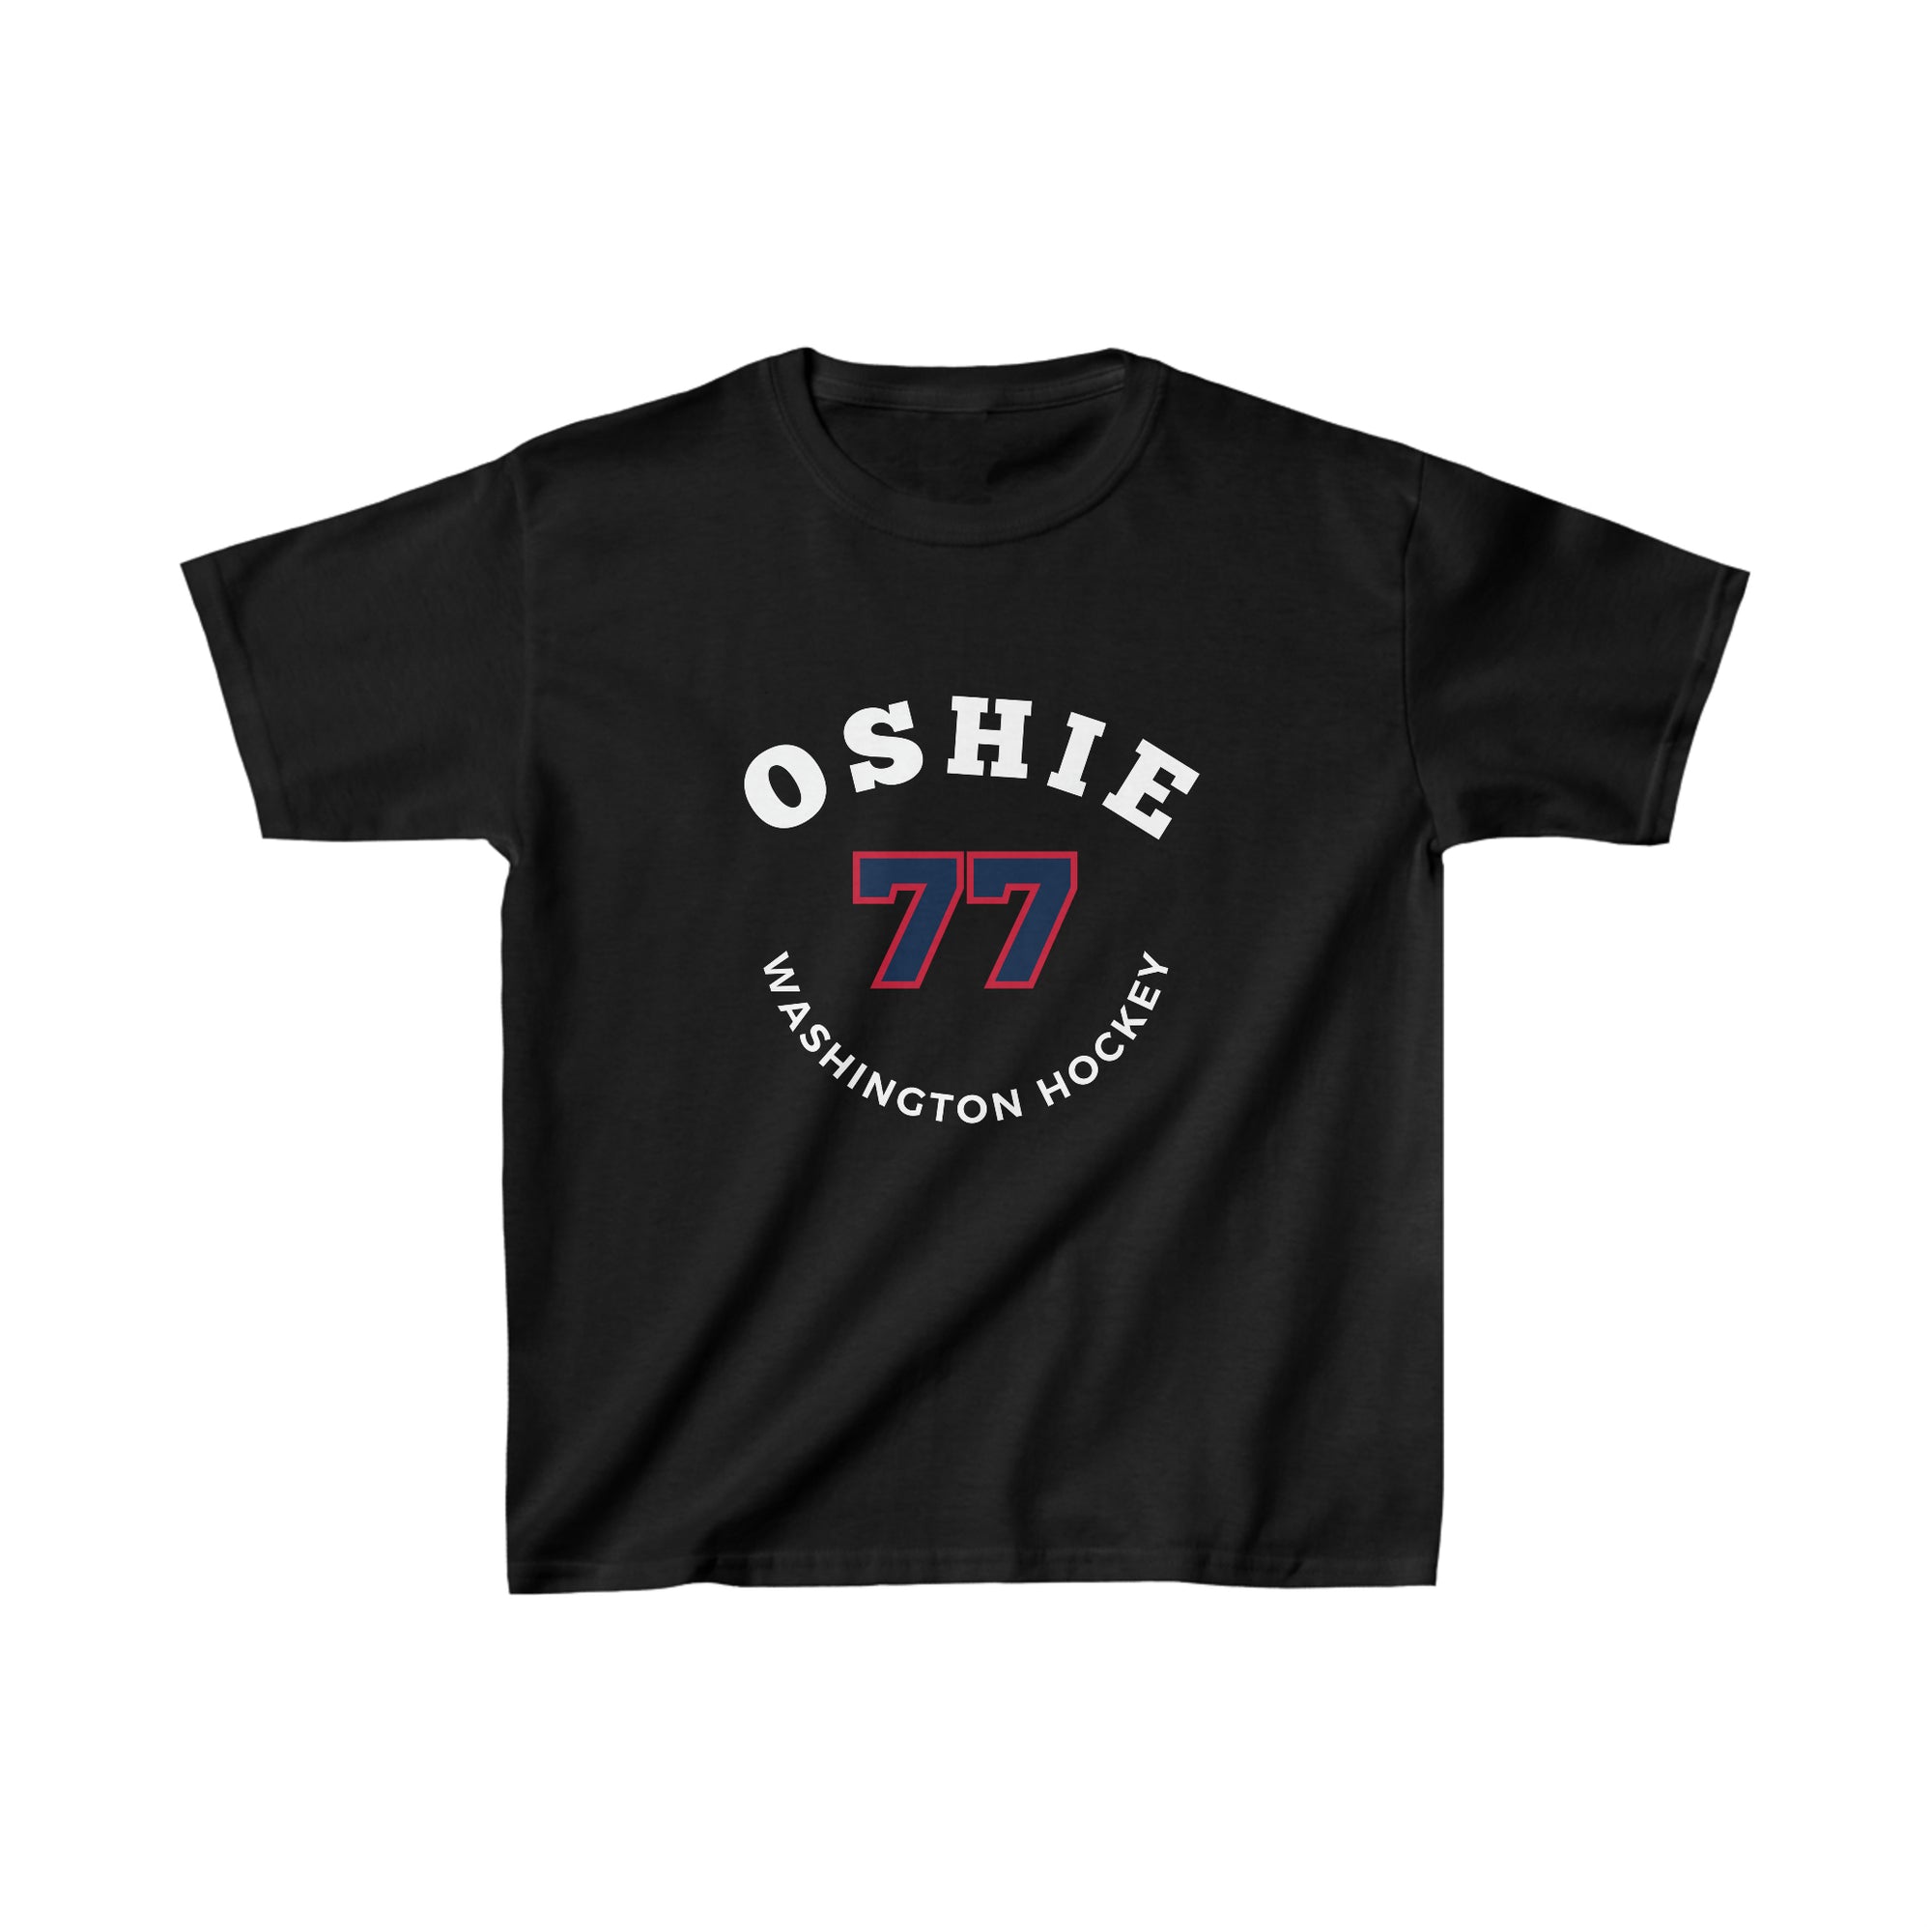 Oshie 77 Washington Hockey Number Arch Design Kids Tee